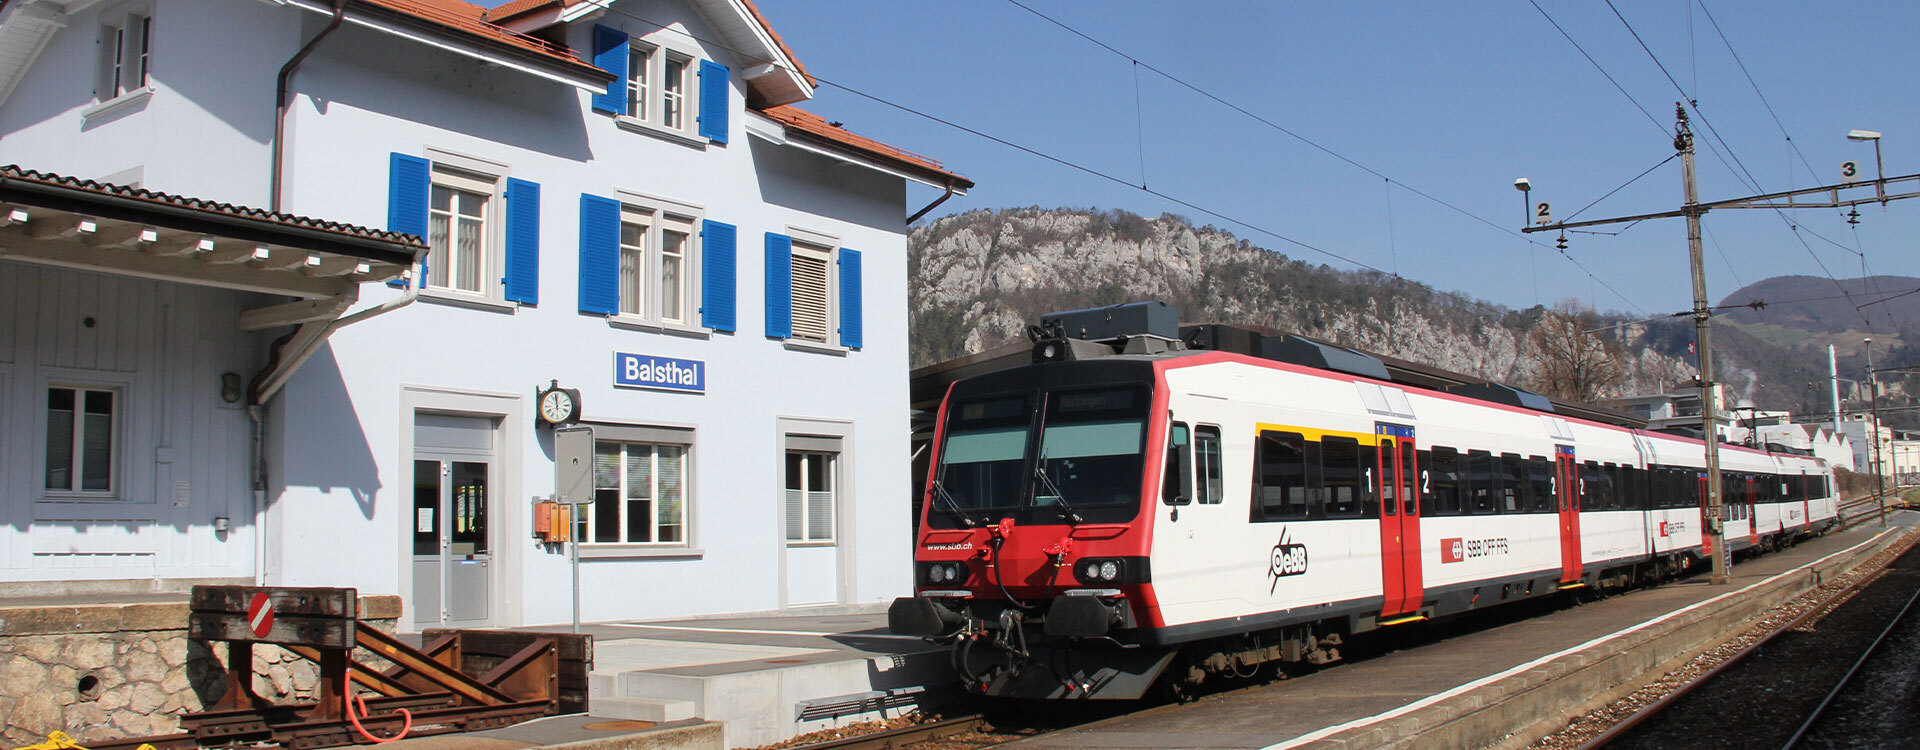 BahnhofBalsthal_mit_Regio_OeBB.jpg